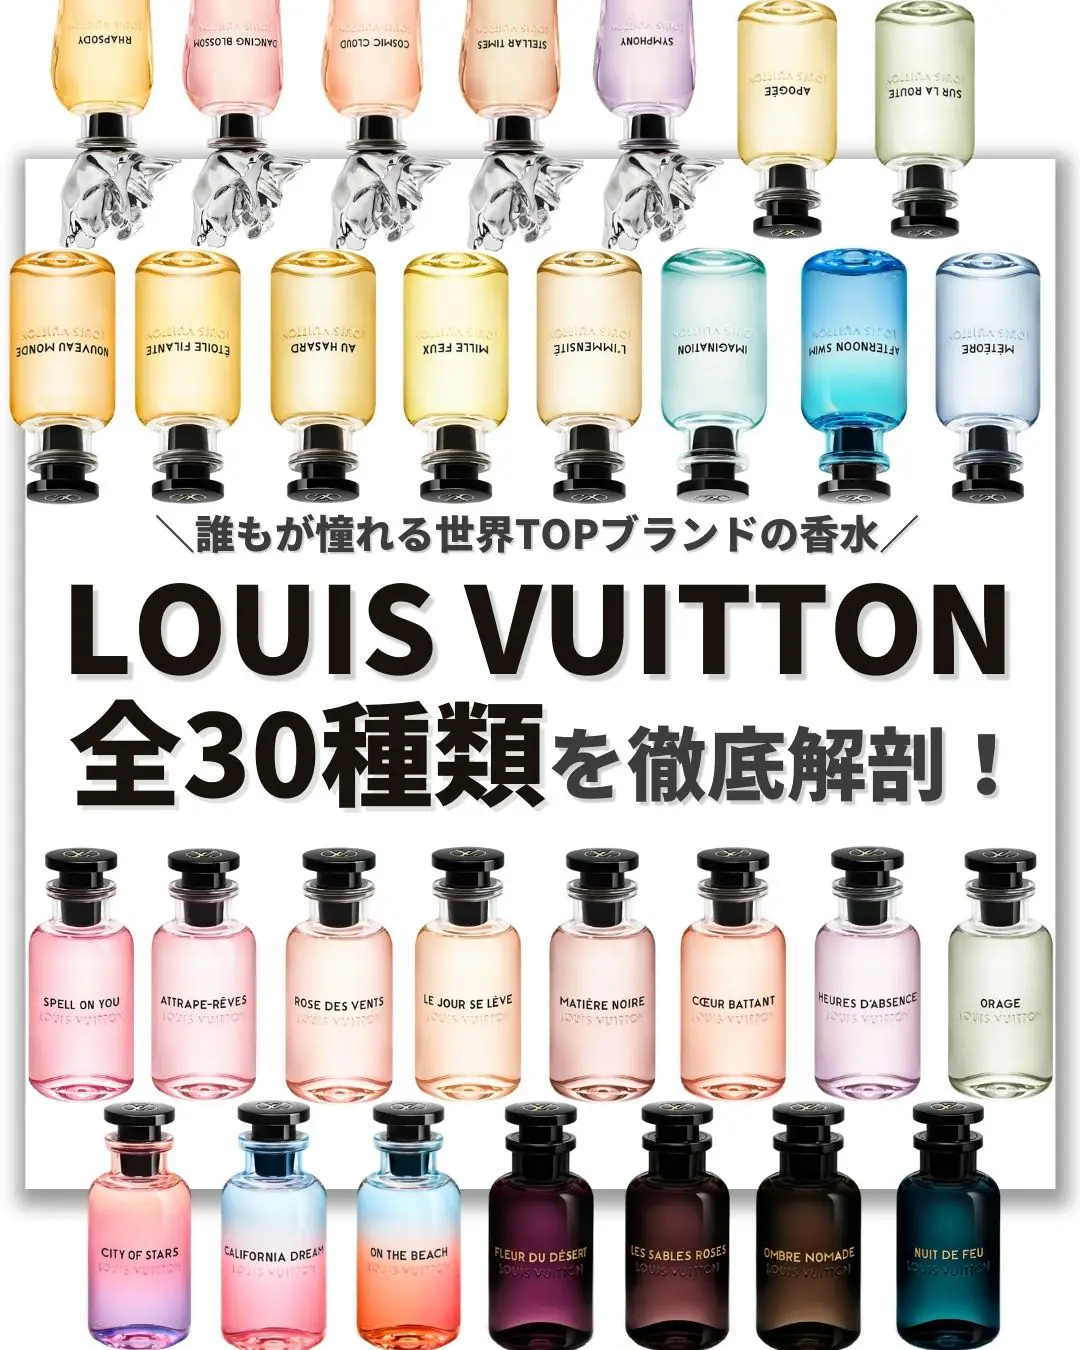 Louis Vuitton perfume #louisvuitton #lv #louisvuittonperfume #perfume